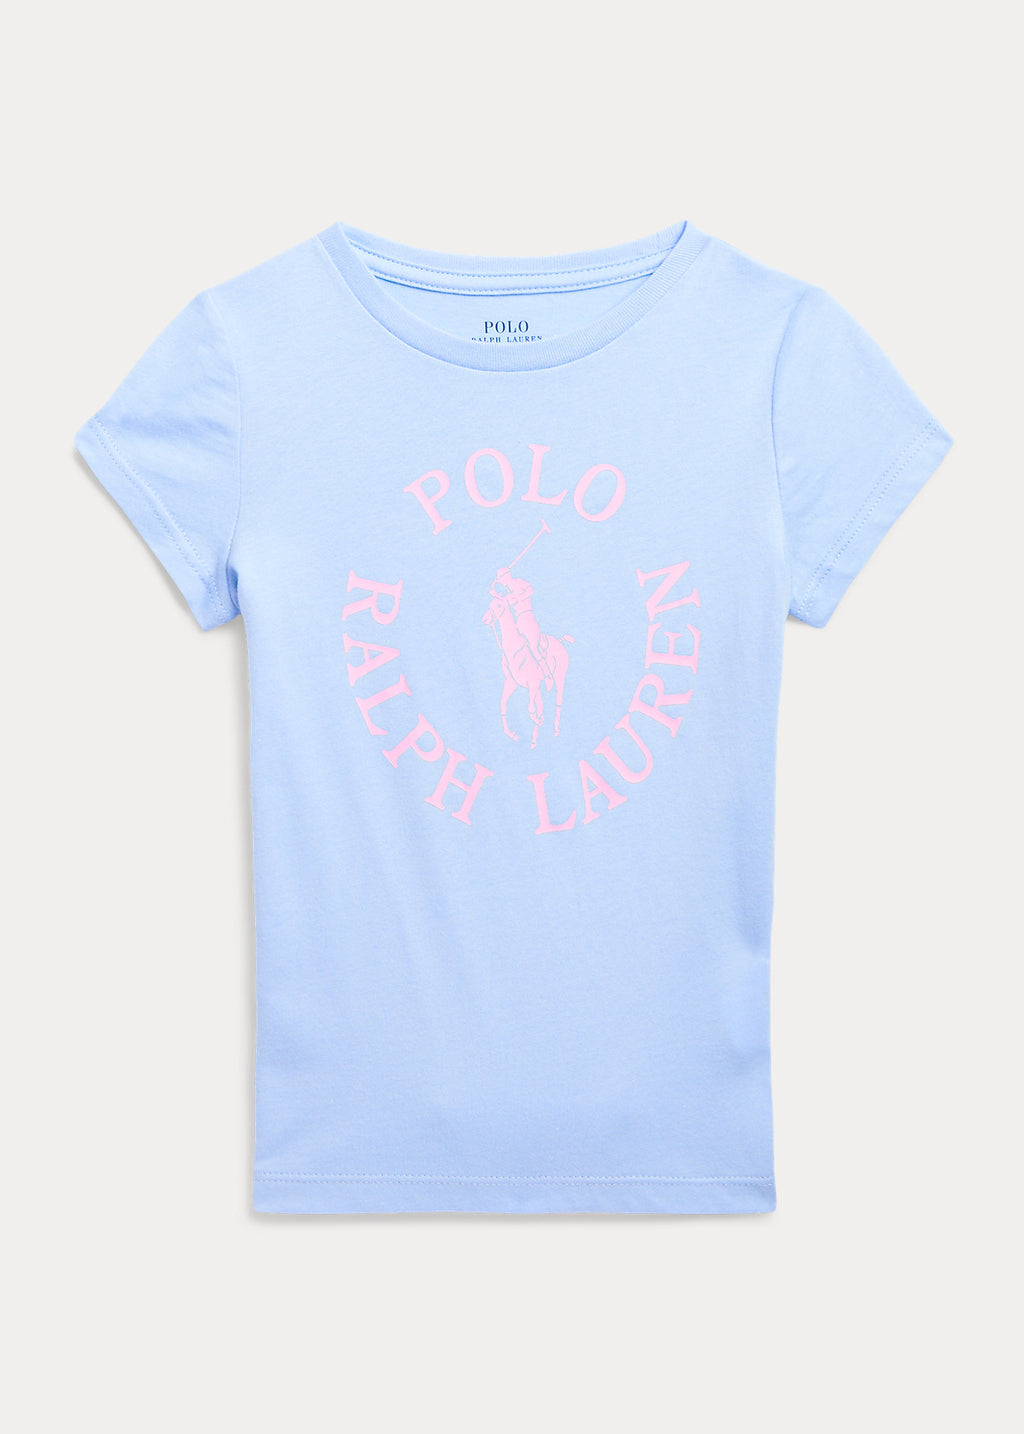 Ralph Lauren Big Pony Logo Cotton Jersey T-Shirt Baby Blue